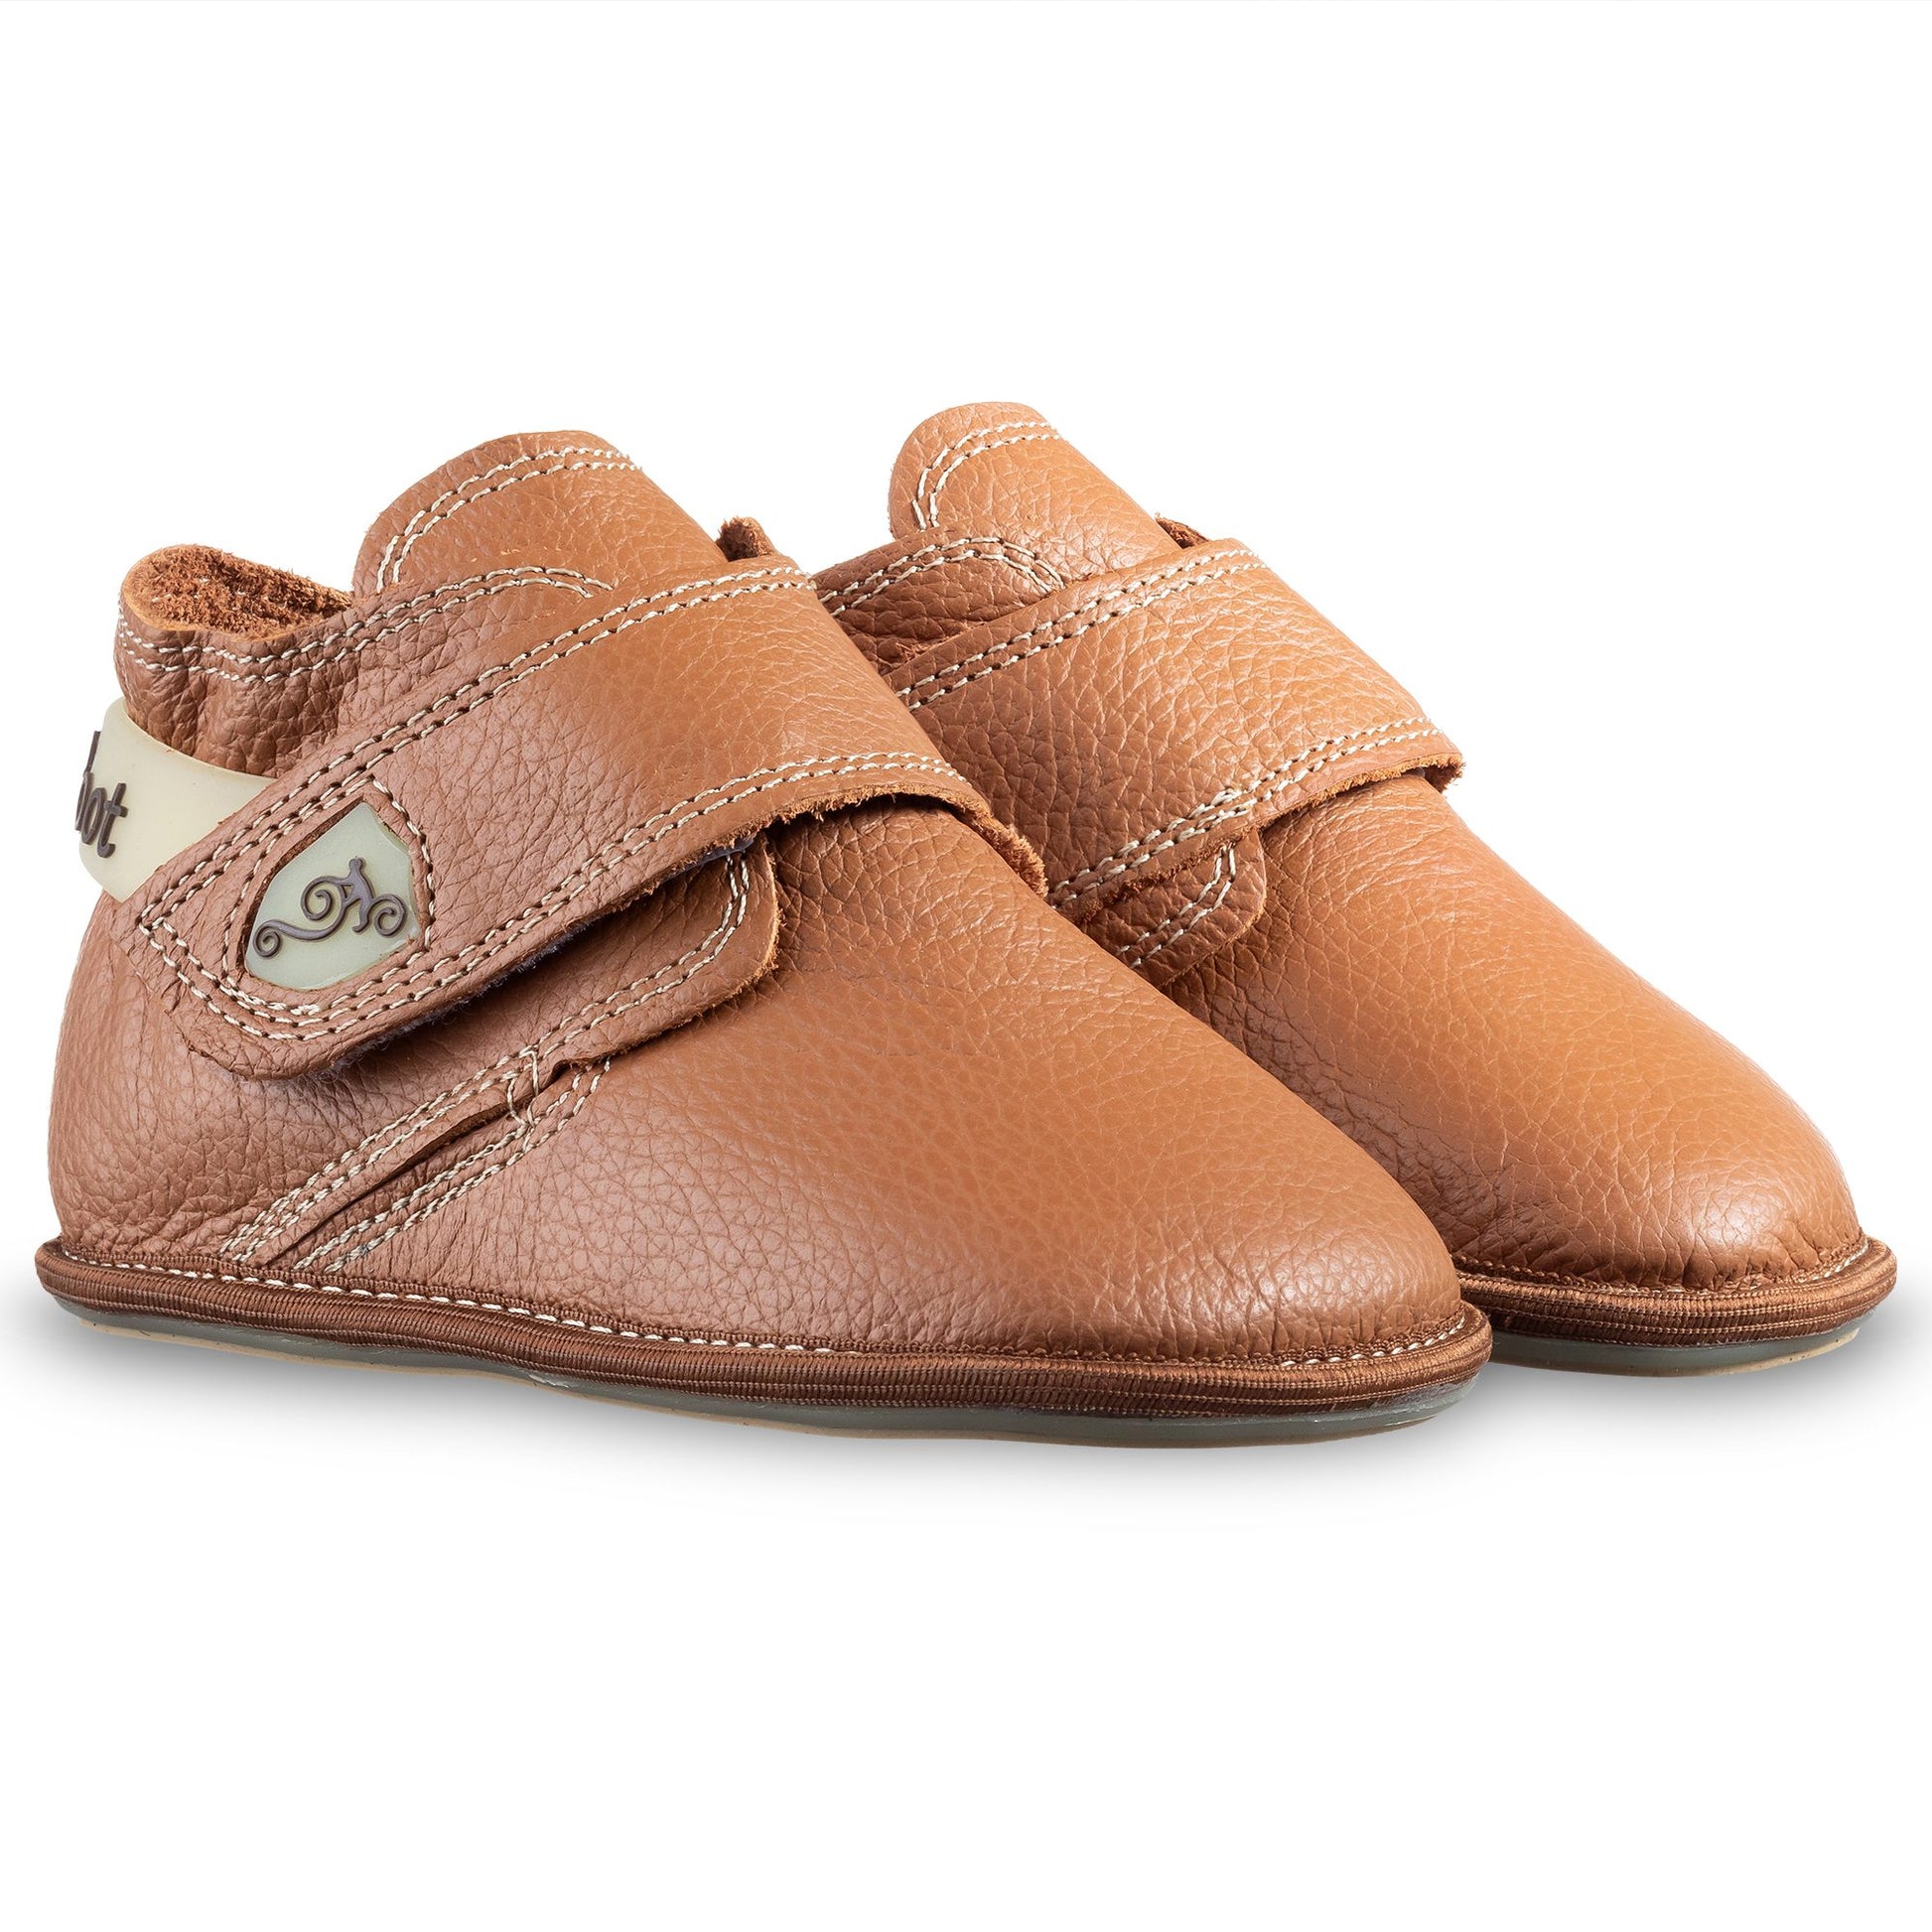 Zapatos Respetuosos Froddo Cognac Laces - Deditos Barefoot